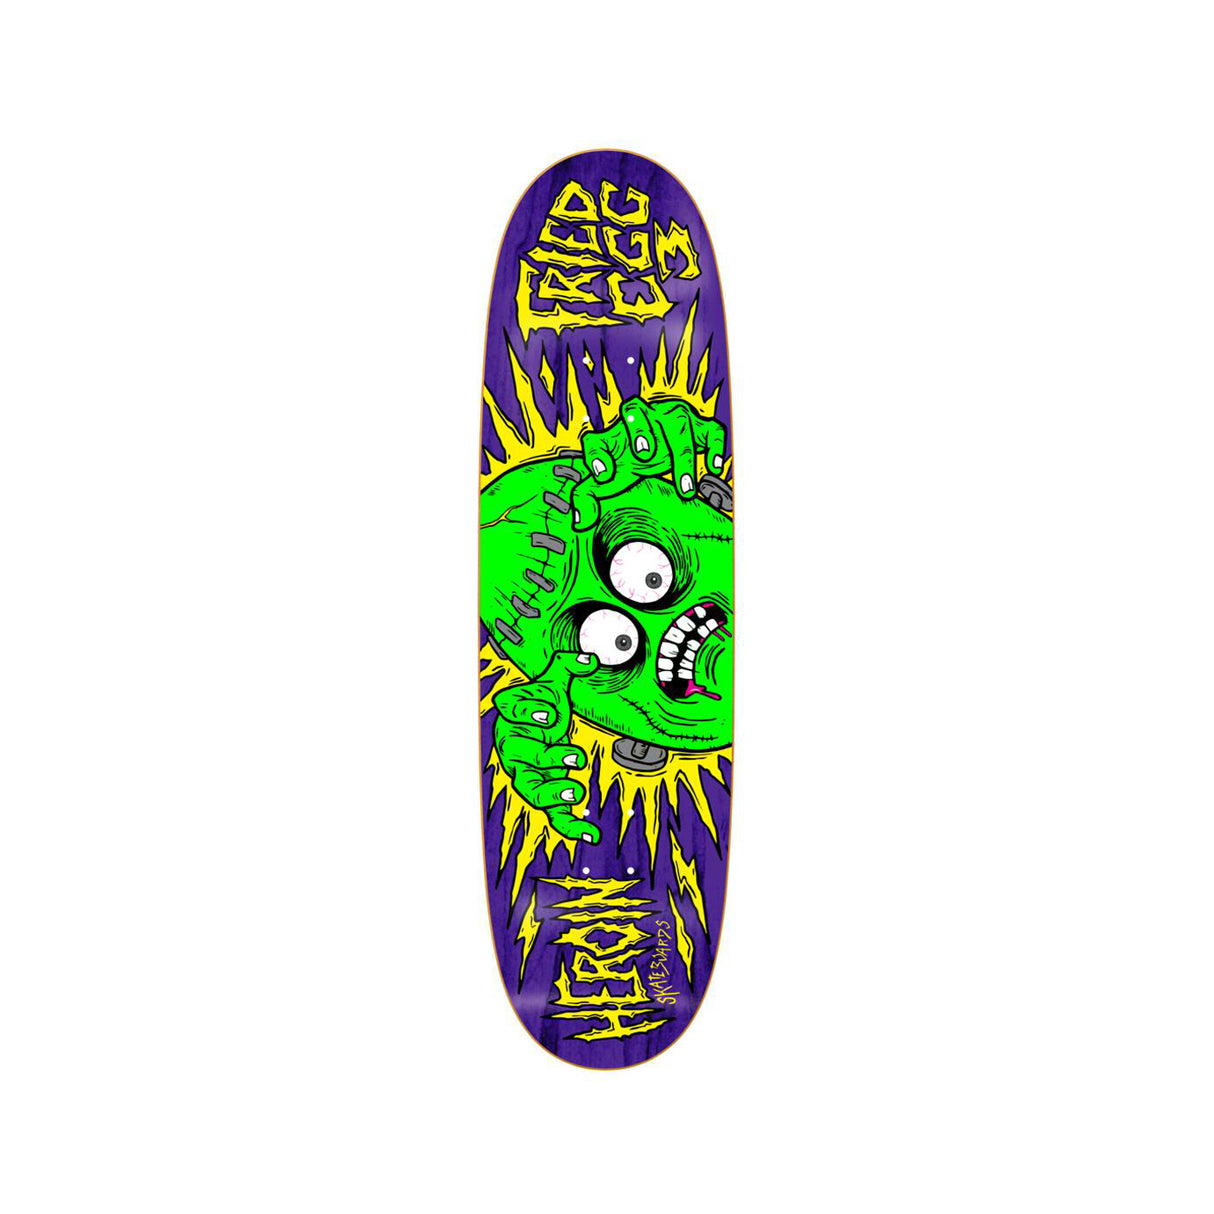 Heroin Skateboards Fried Egg 3 8.9 x 31.5 Deck w/ Pepper Grip